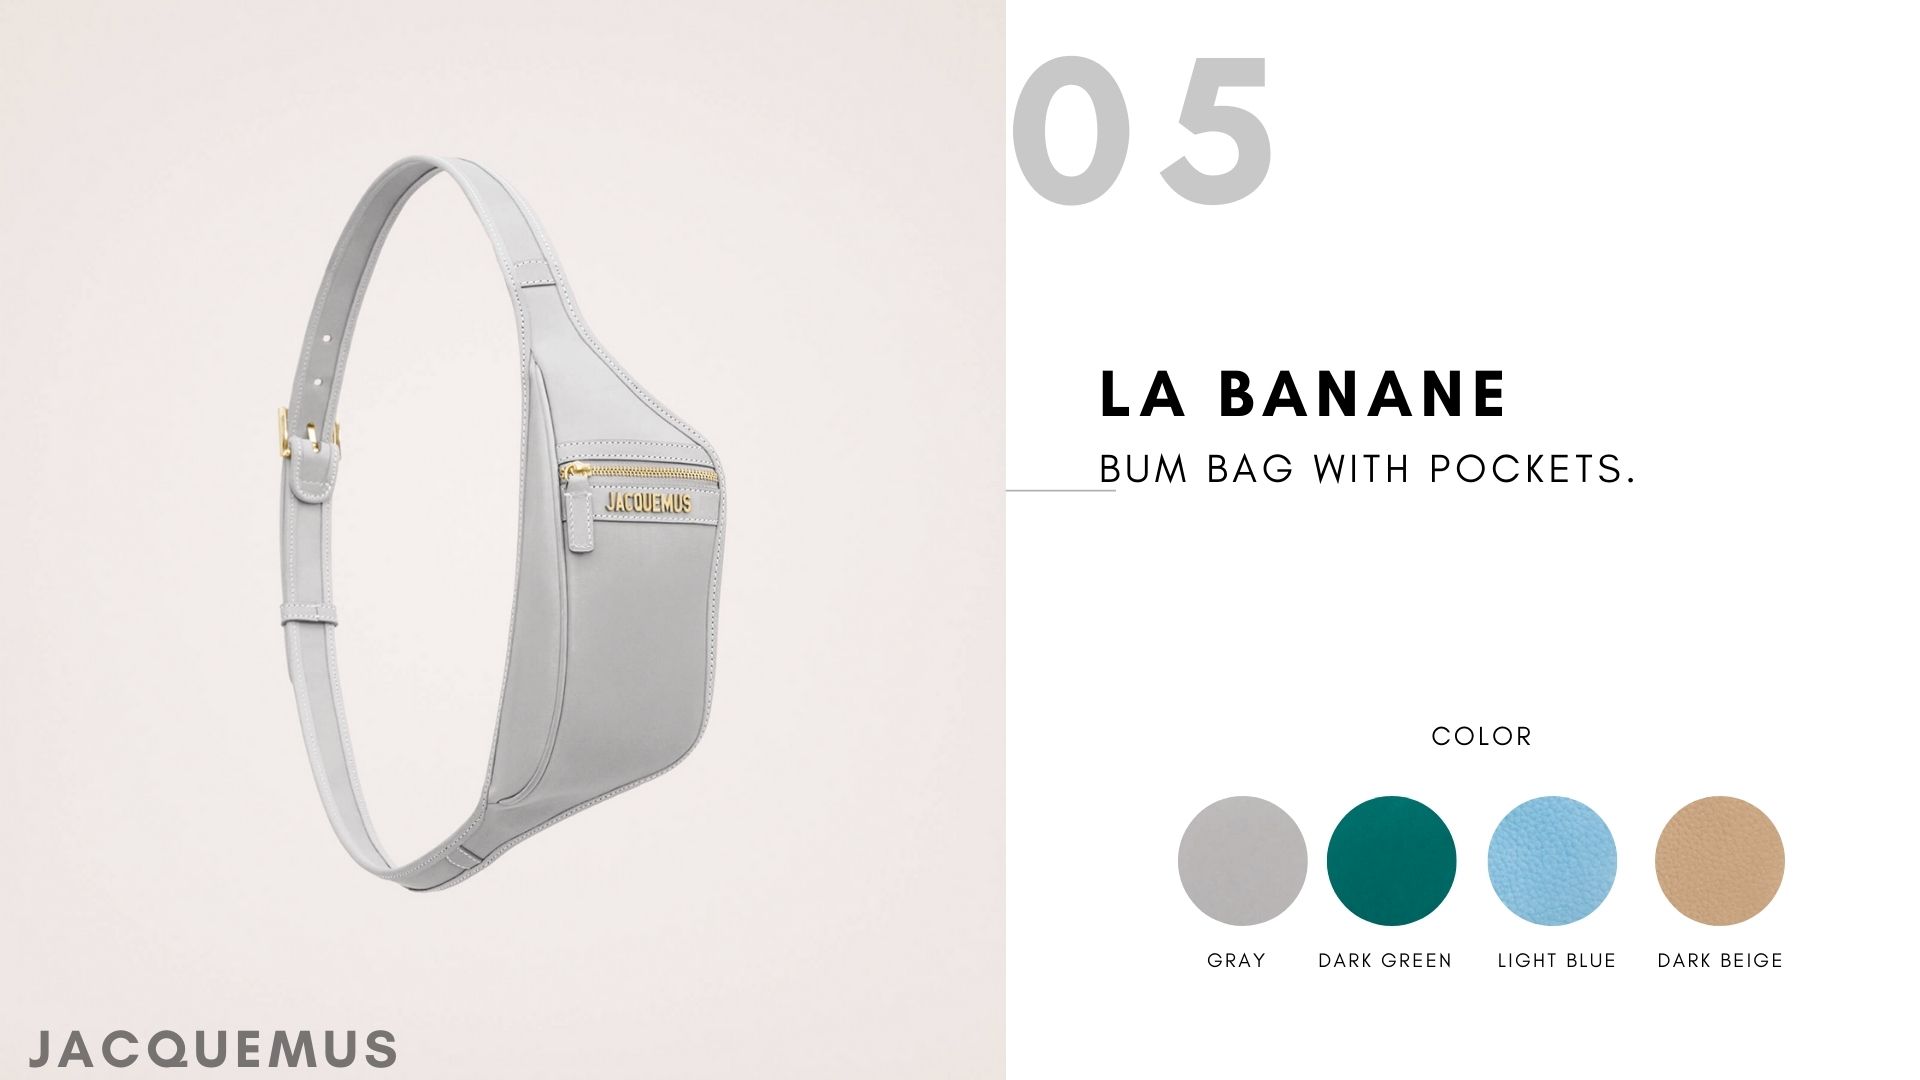 La banane Bumbag with pockets.